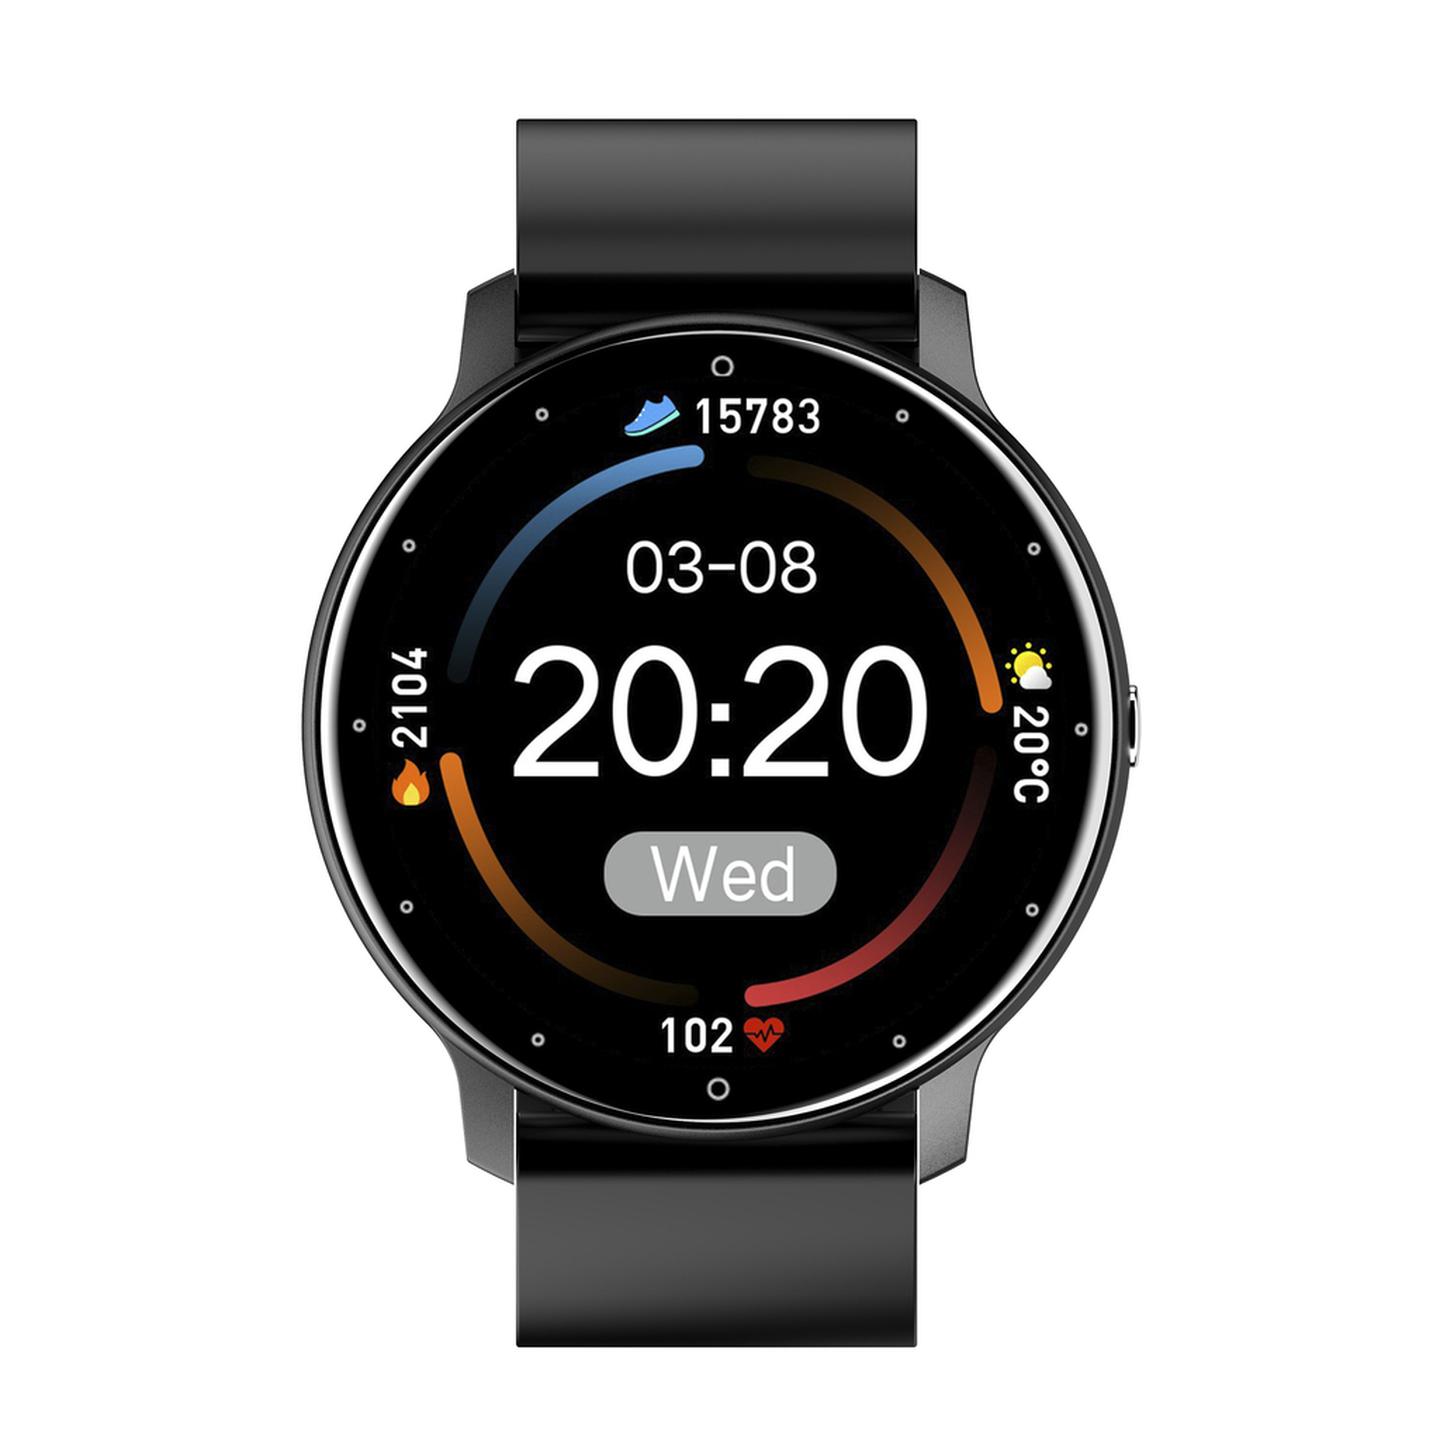 Nextech Waterproof Smart Watch with 1.28 Inch Touchscreen